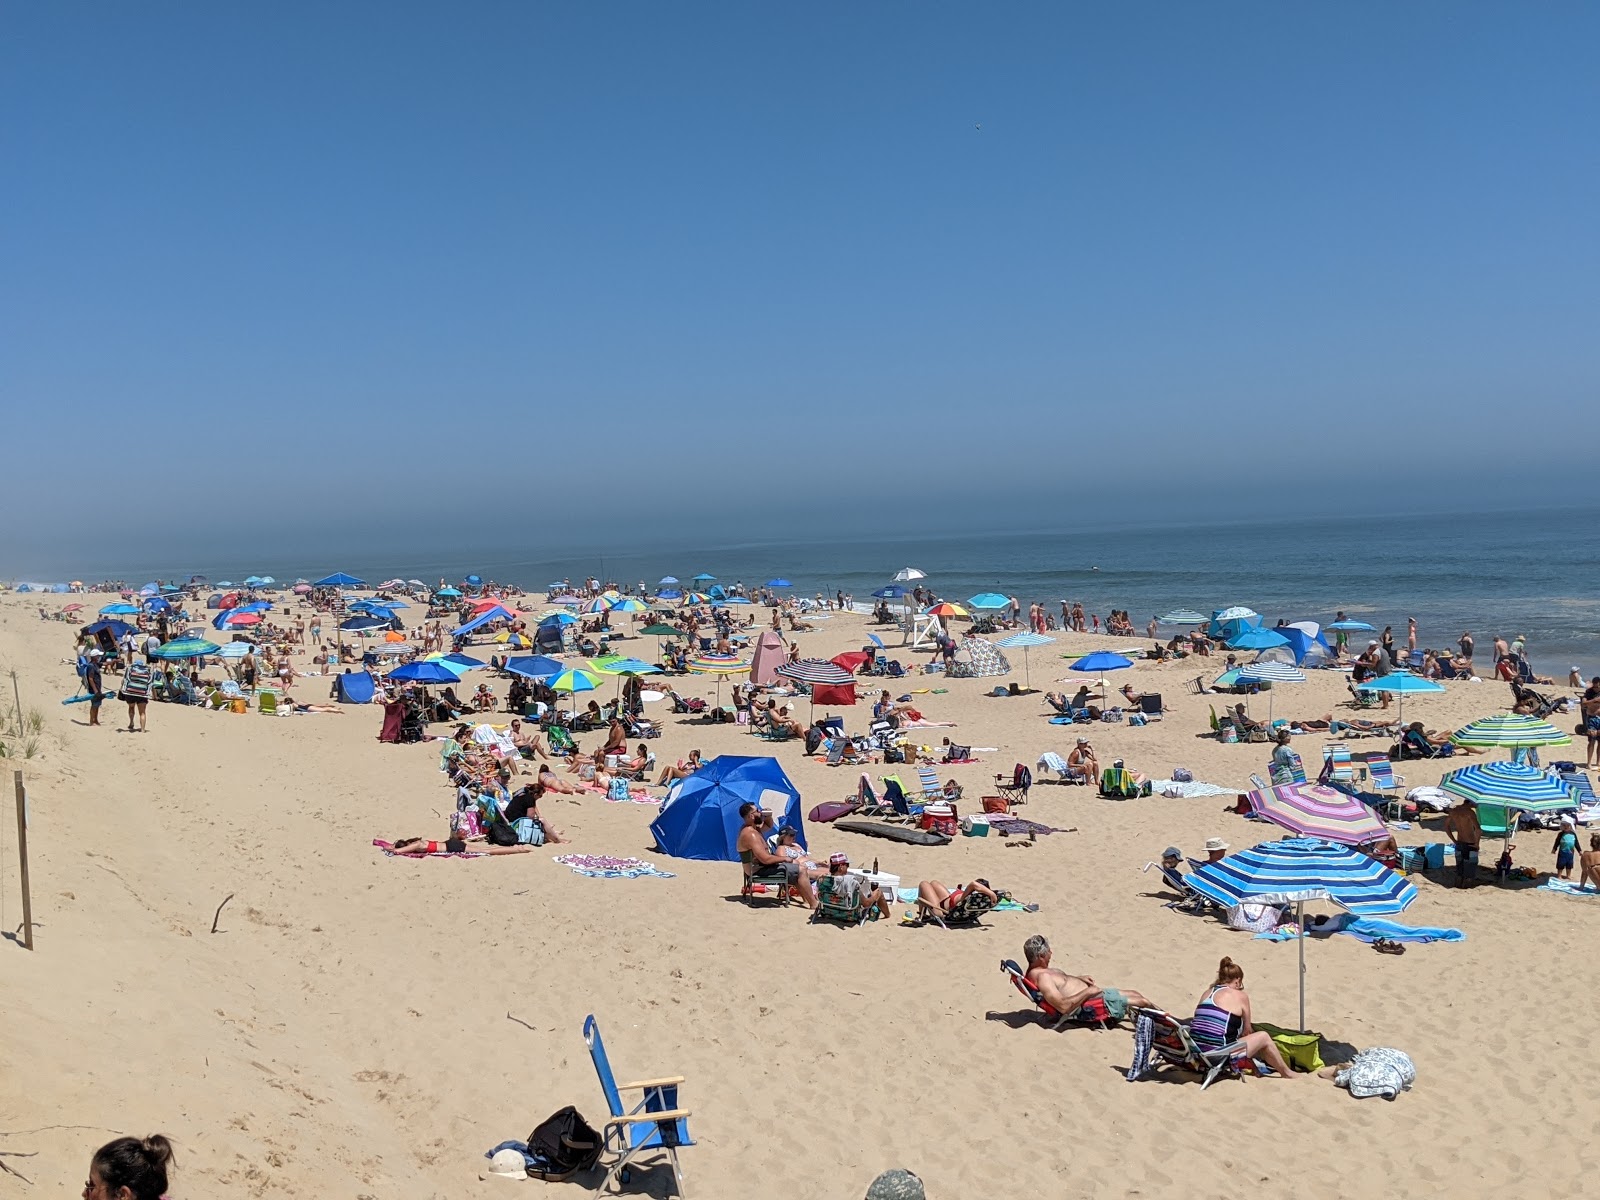 Foto de Marconi beach - lugar popular entre os apreciadores de relaxamento